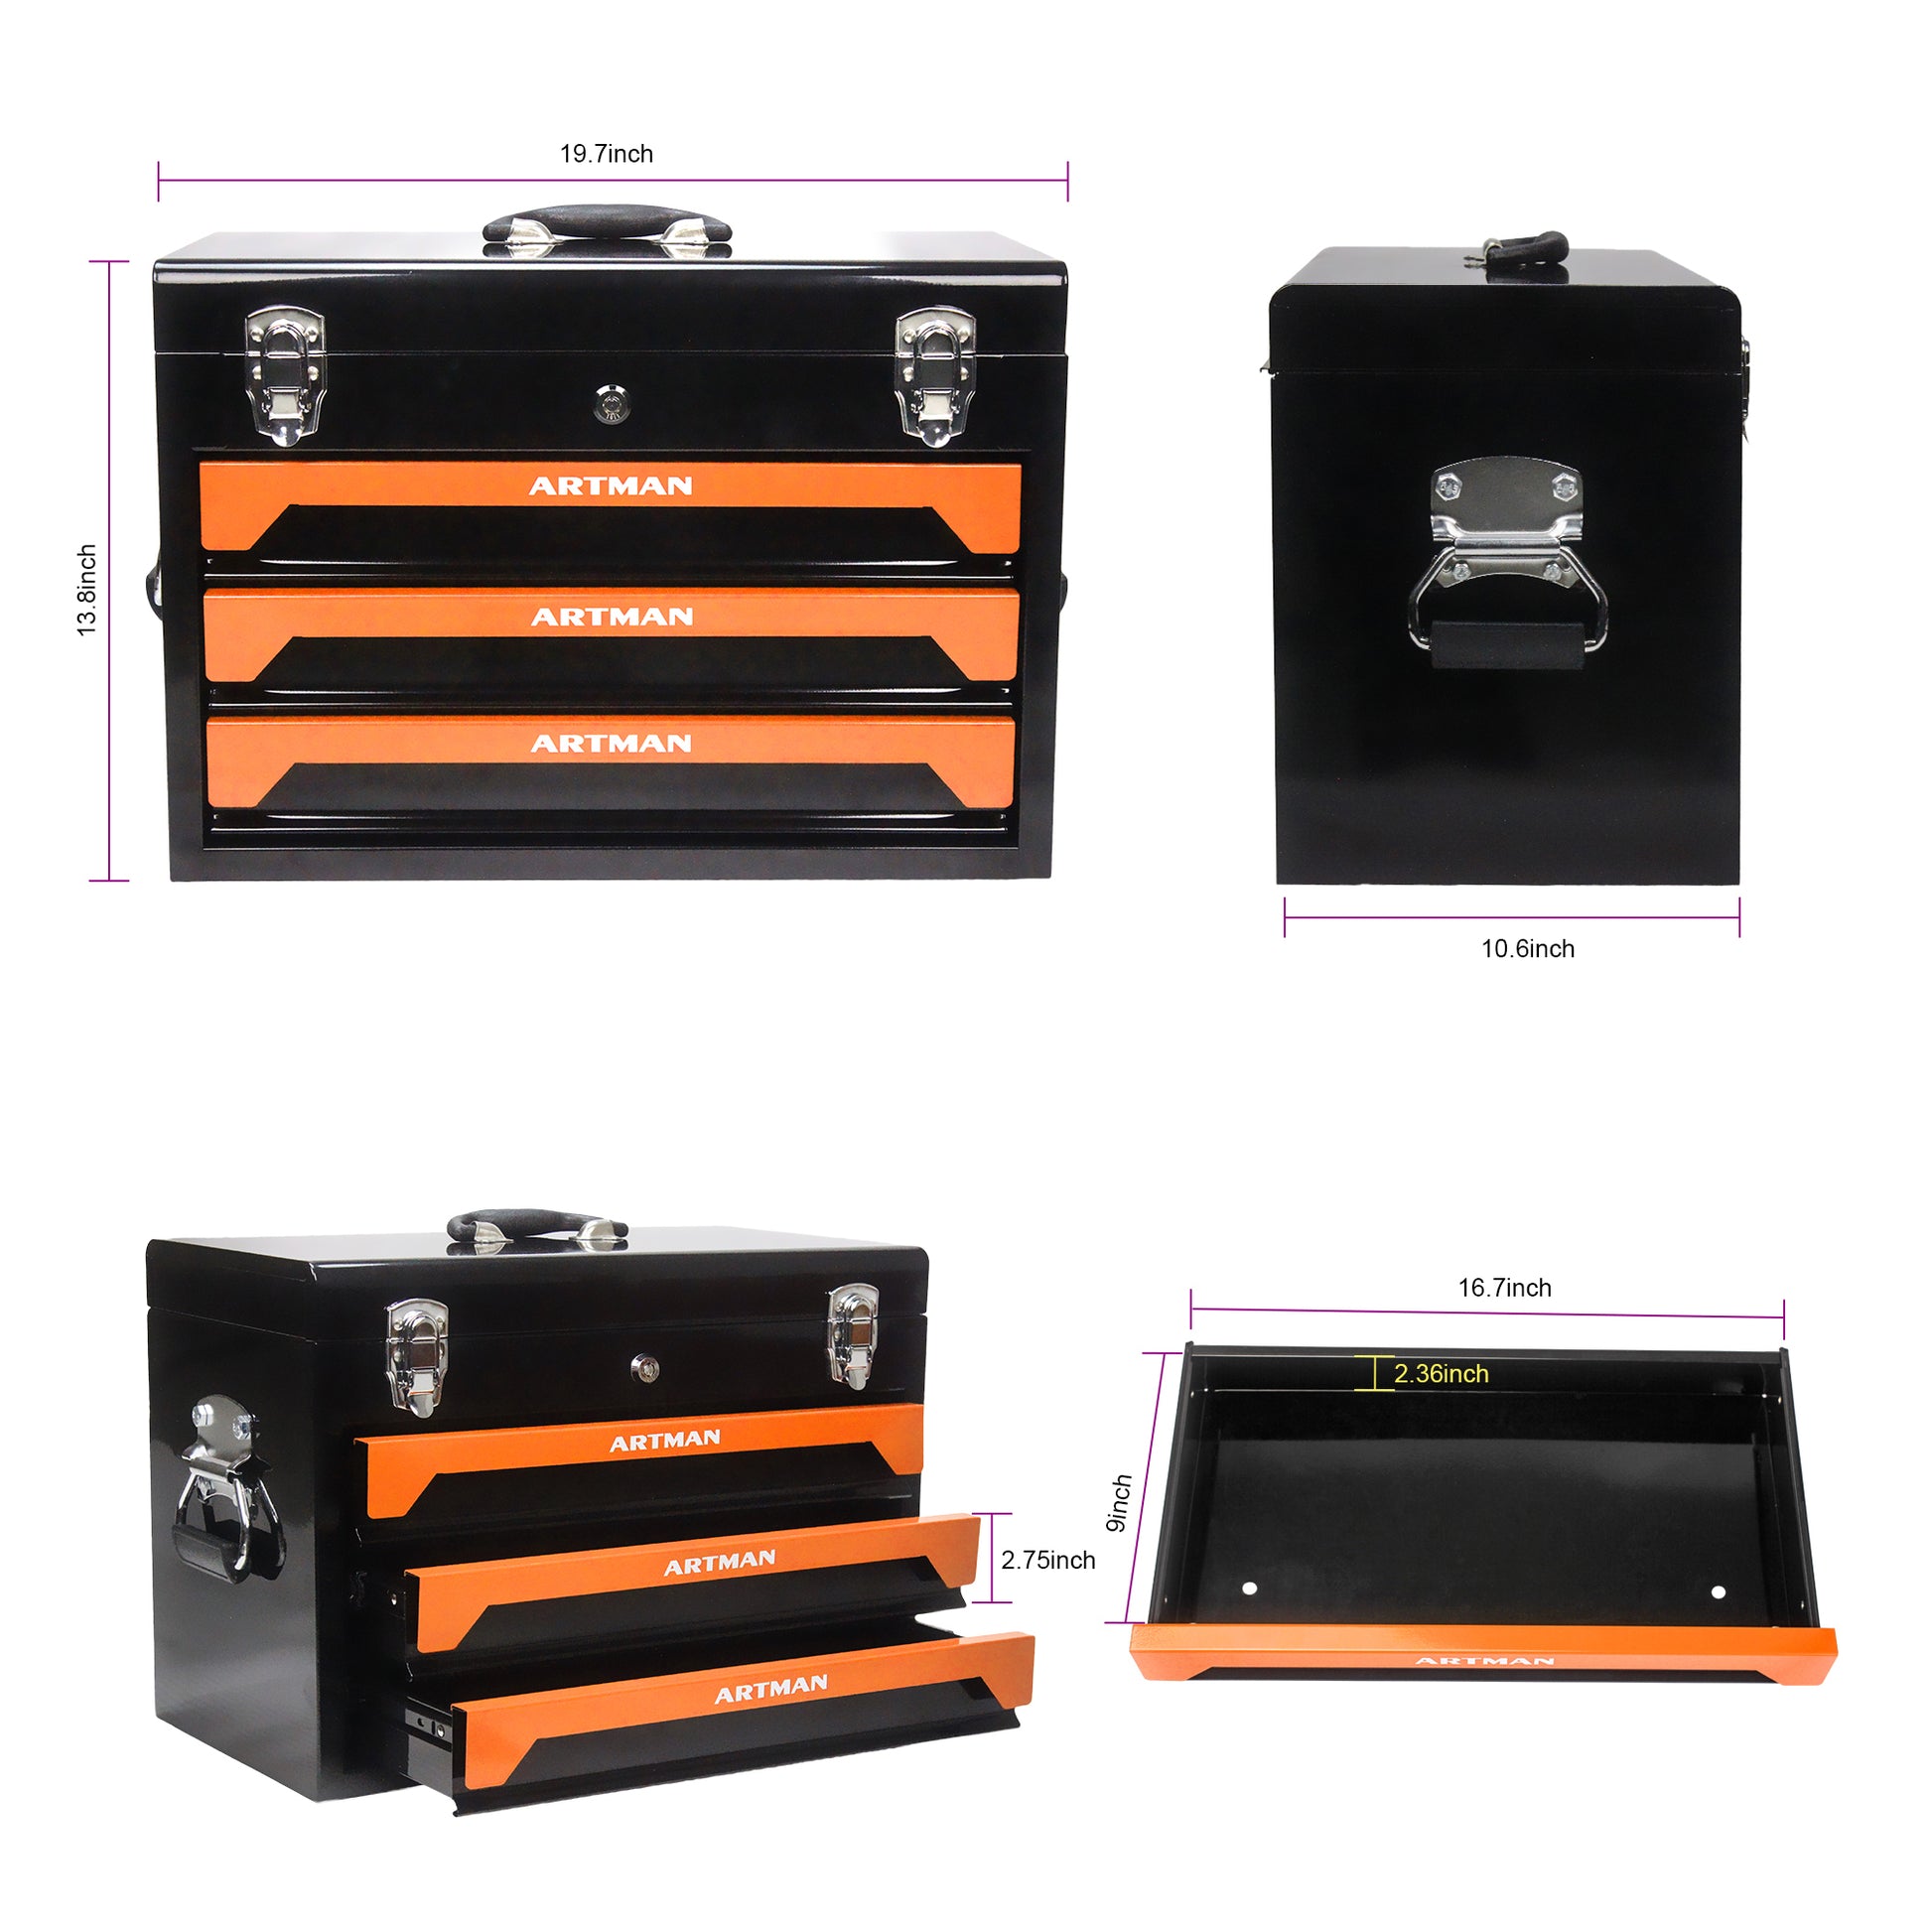 3 Drawers Tool Box with Tool Set Orange orange-steel